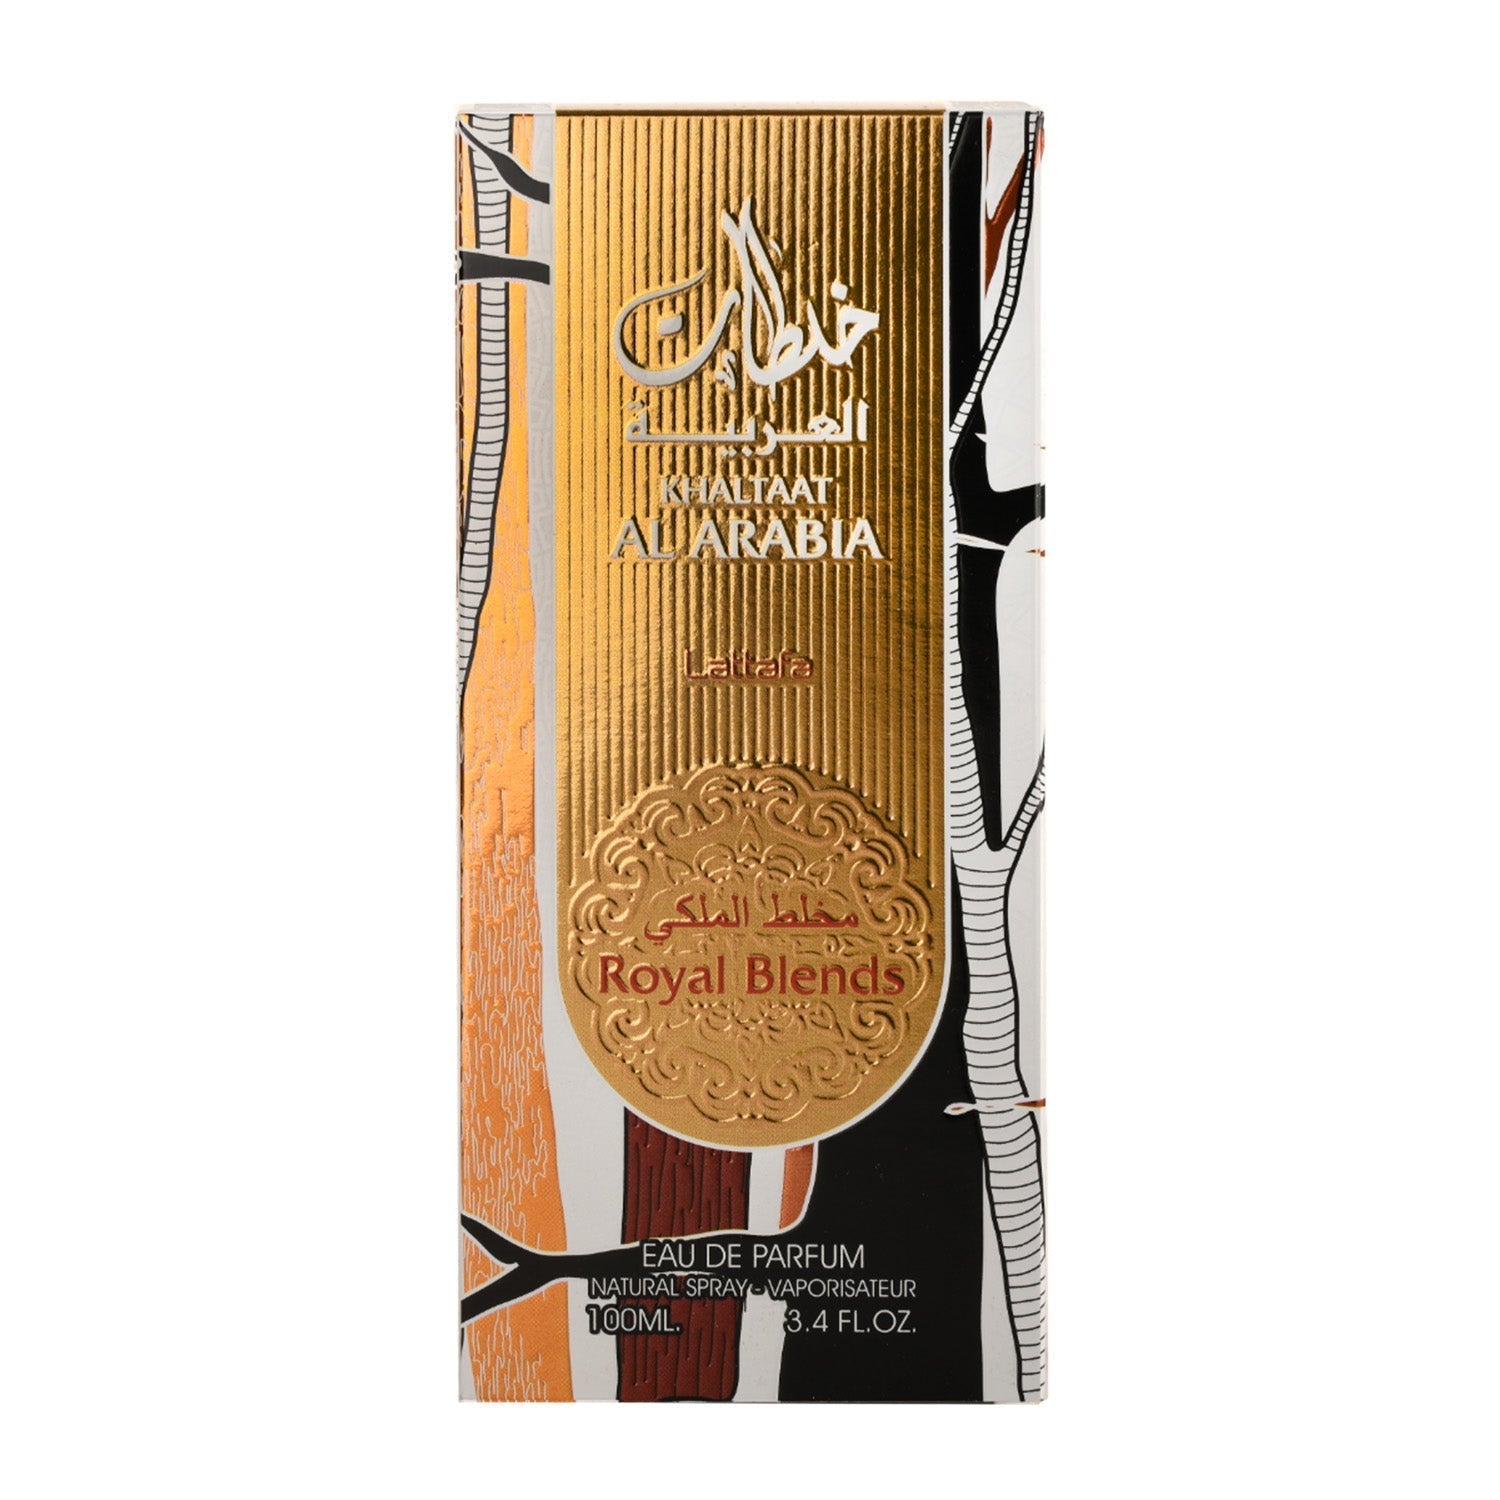 Khaltaat Al Arabia Royal Blends Eau De Parfum 100ml Lattafa-Perfume Heaven